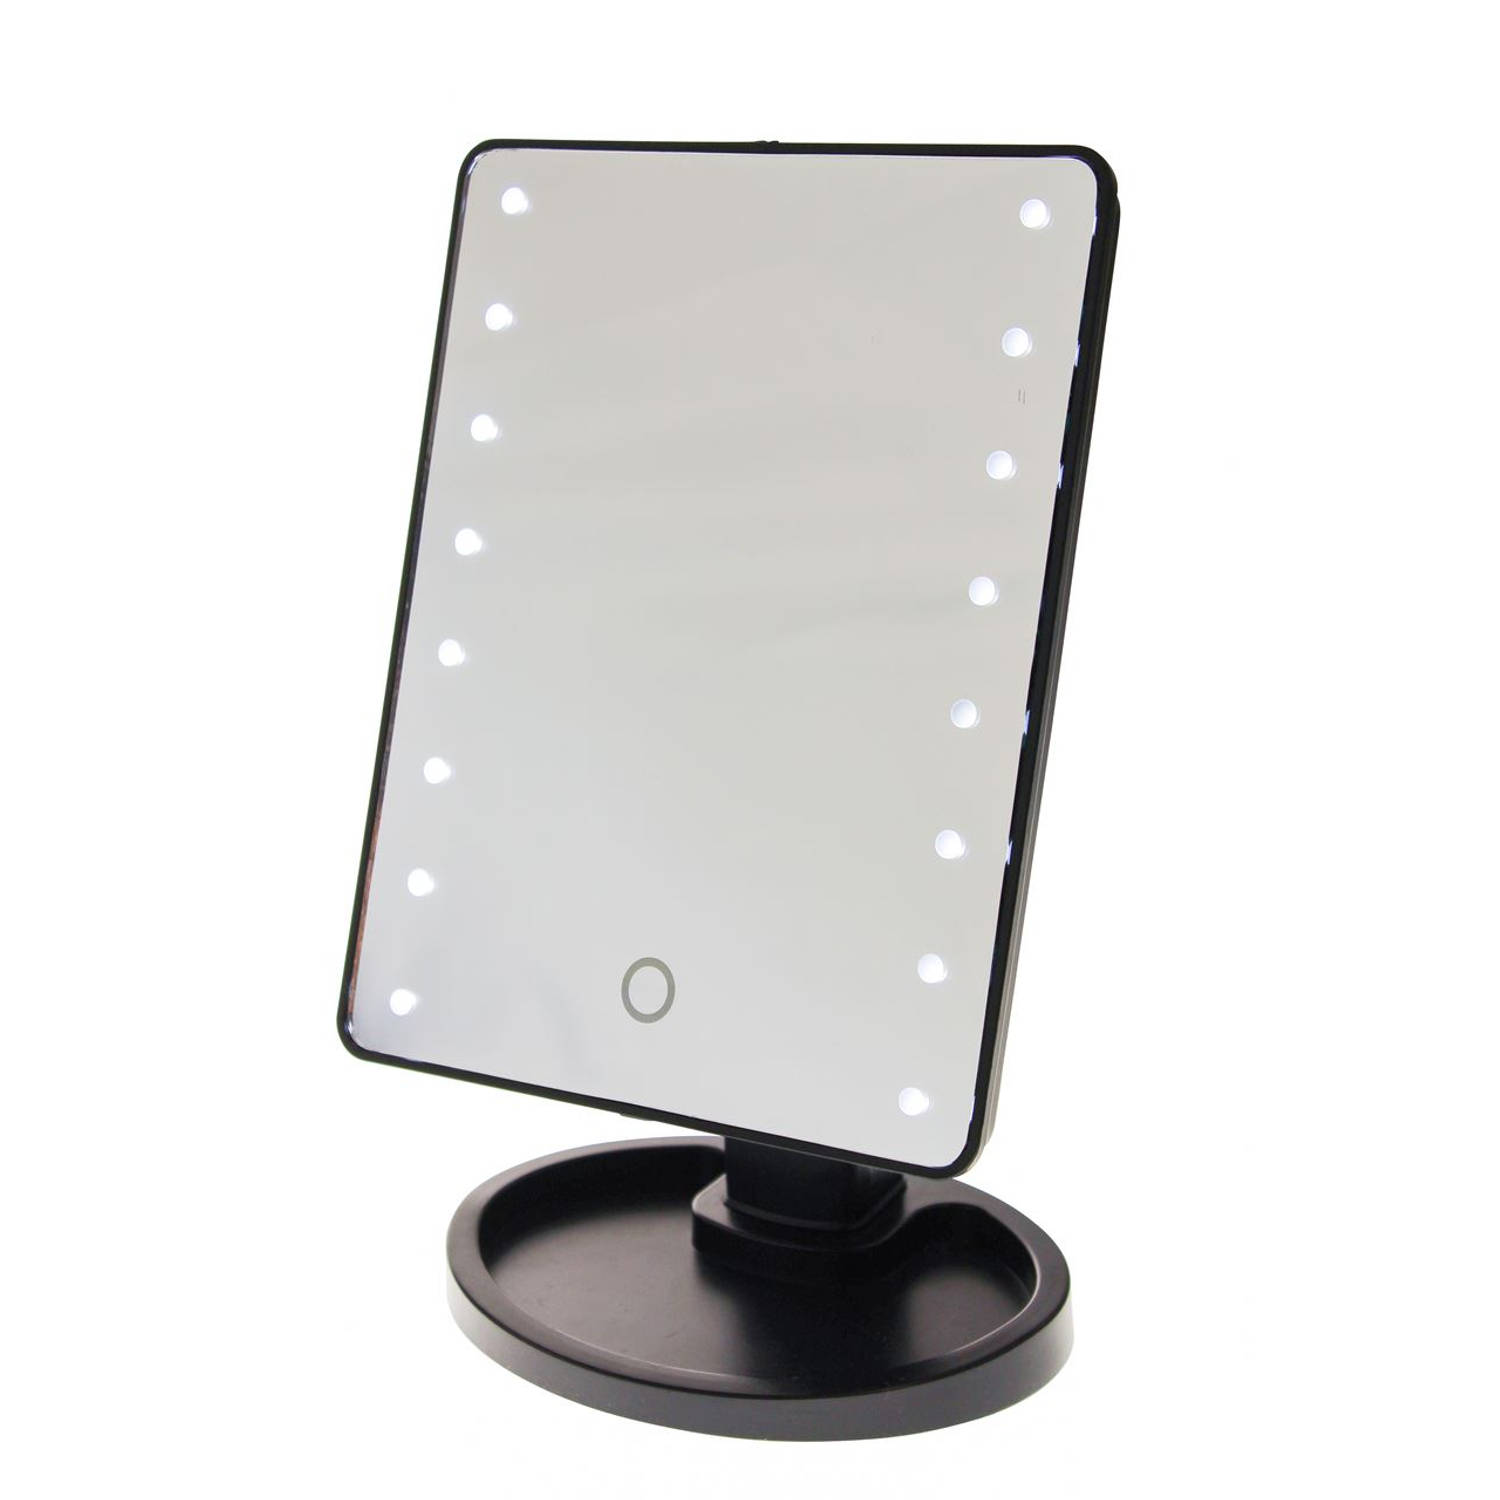 Kantine hoekpunt per ongeluk Touch Screen Make-Up Spiegel met LED verlichting - Zwart | Blokker